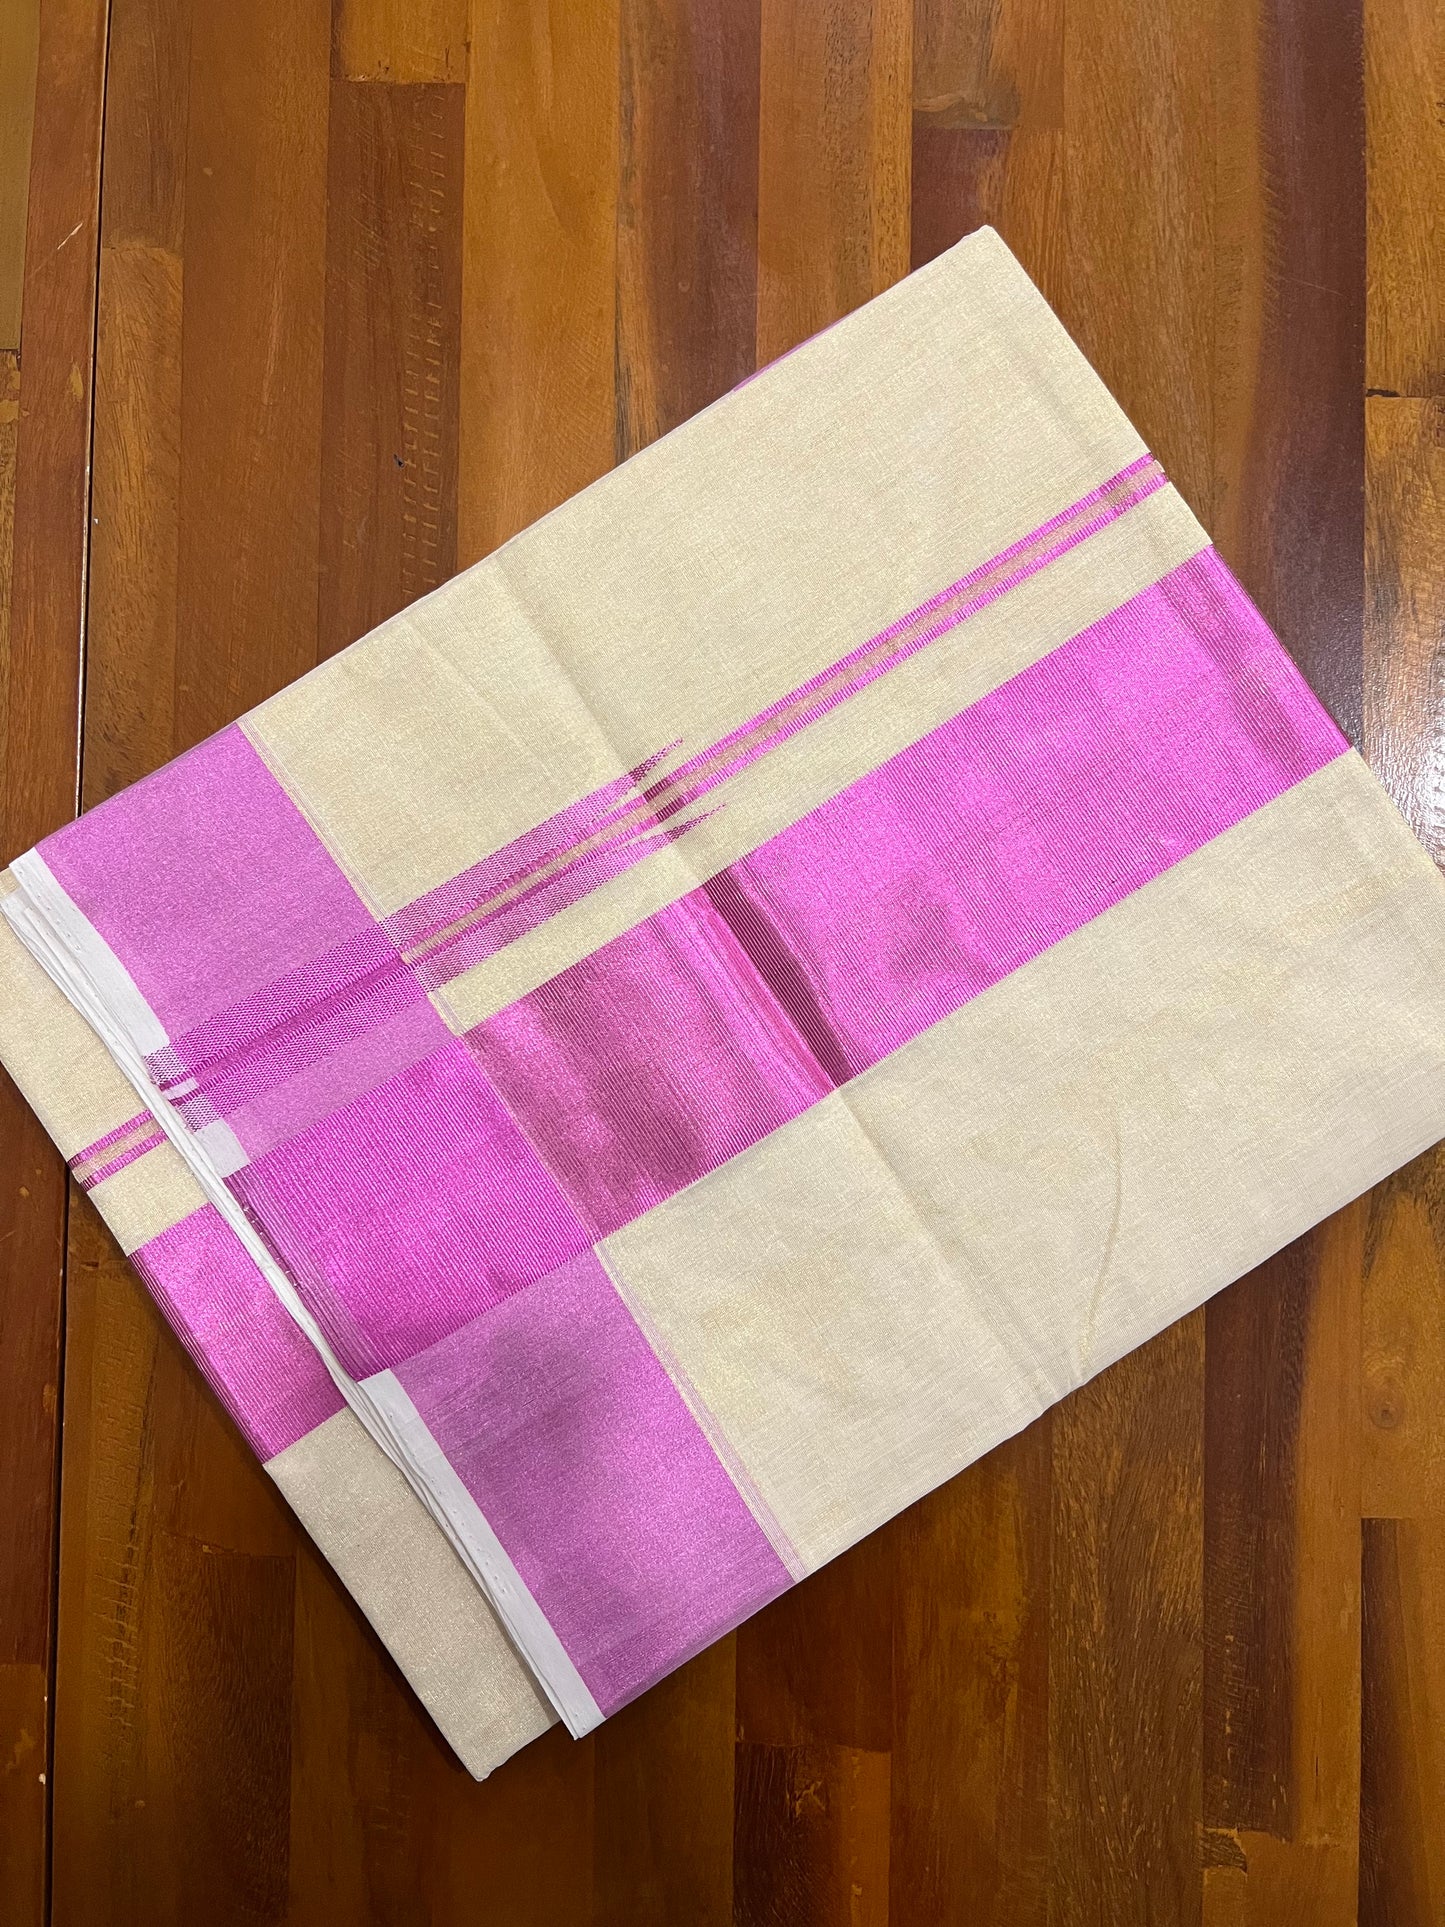 Southloom Exclusive Premium Handloom Tissue Saree with Dark Pink Kasavu Borders and Kara